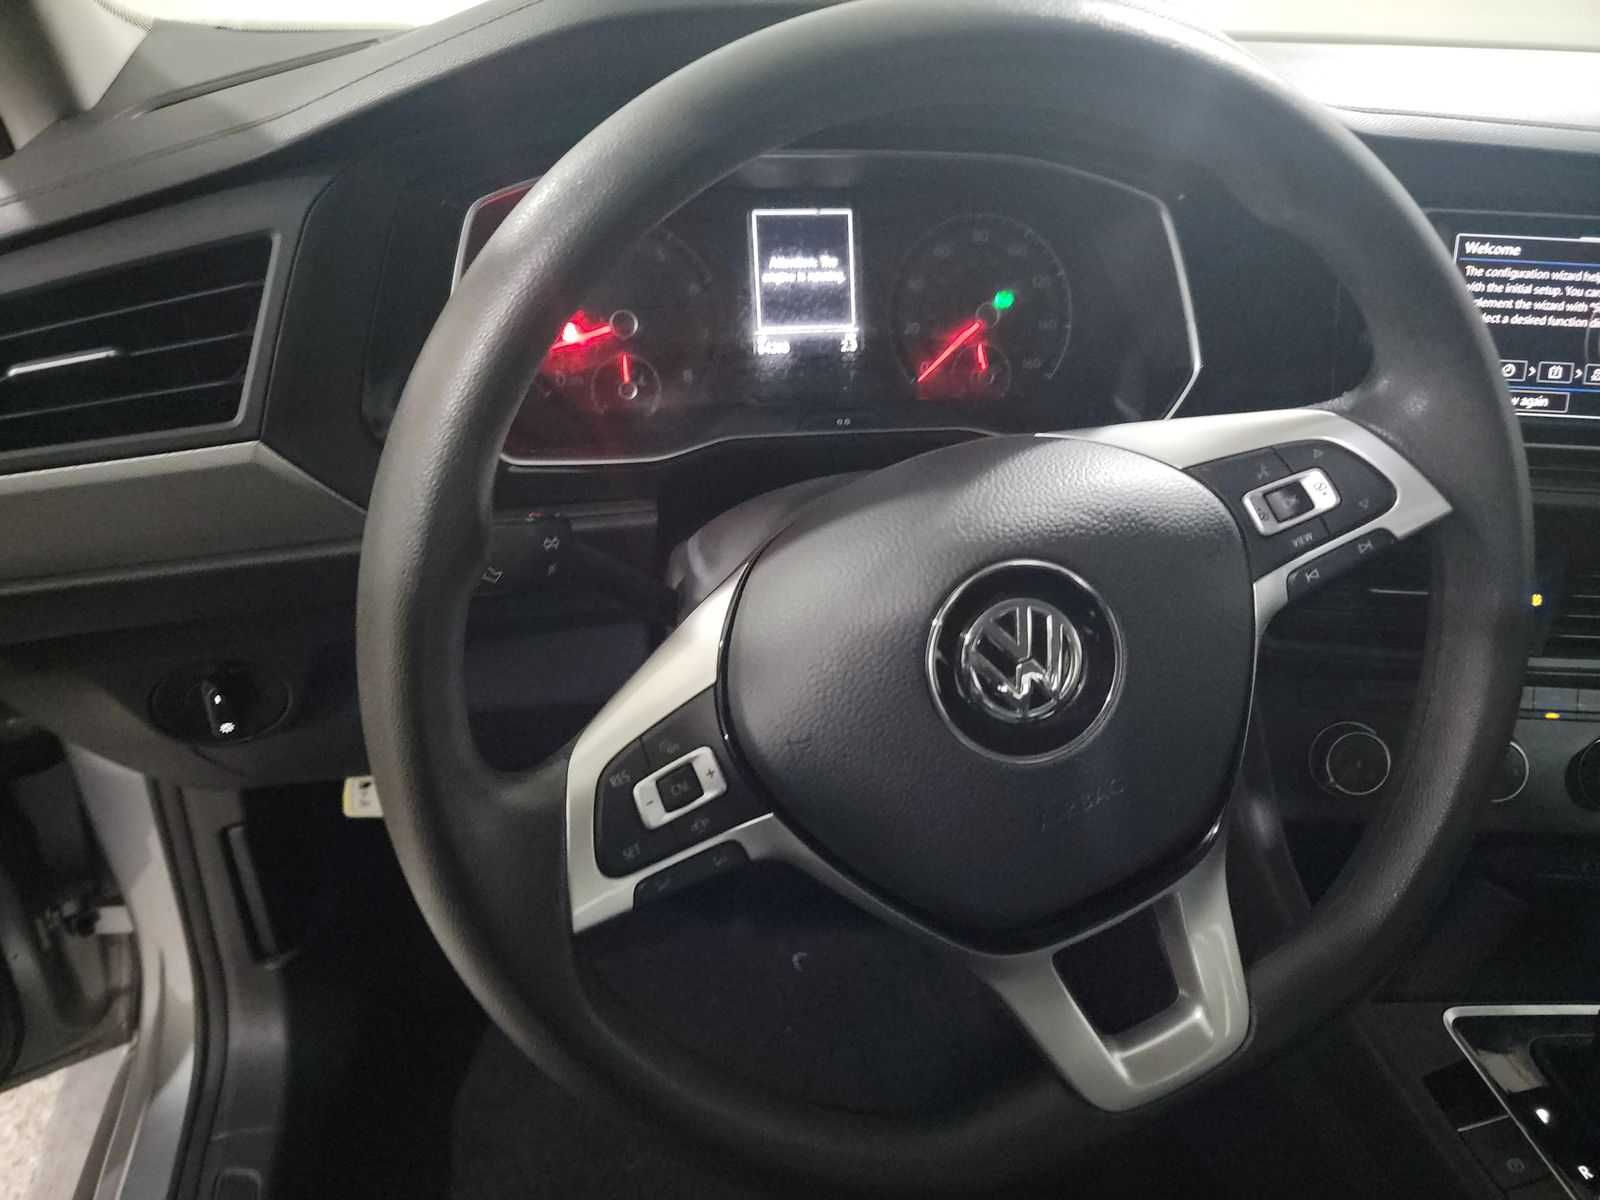 Volkswagen Jetta S 2020 року випуску